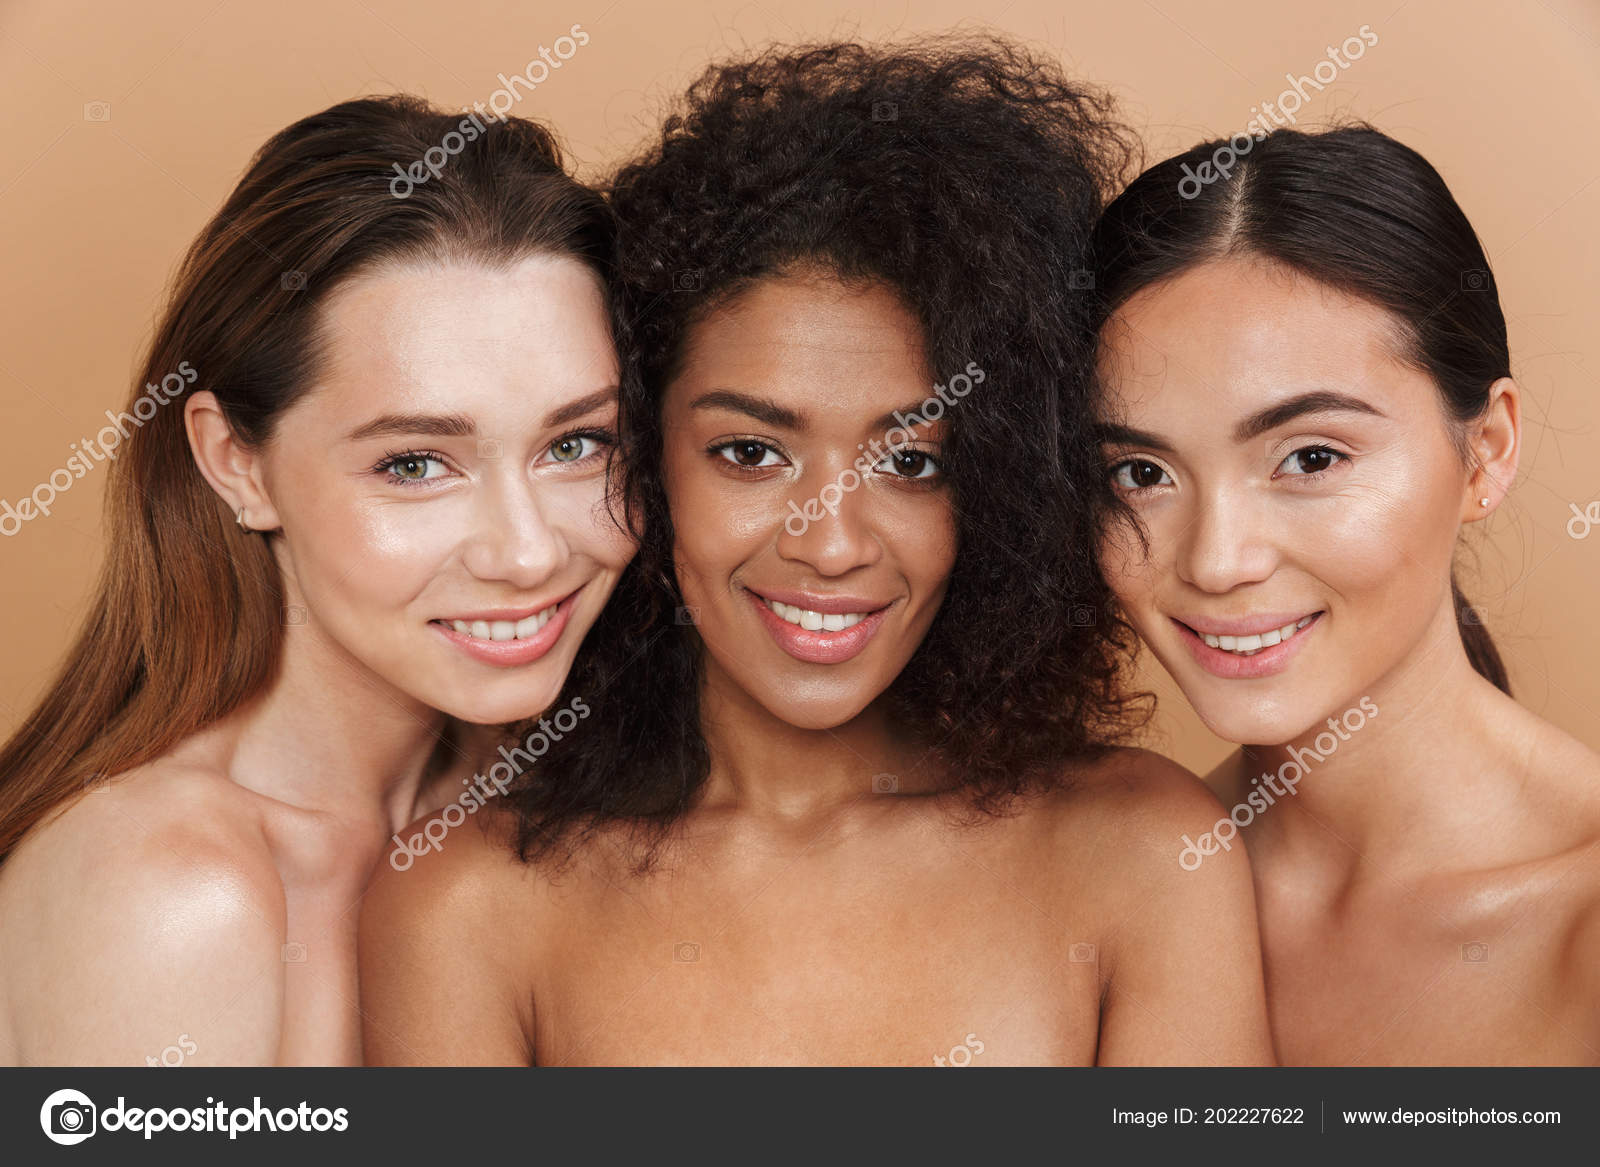 Women Naked Together